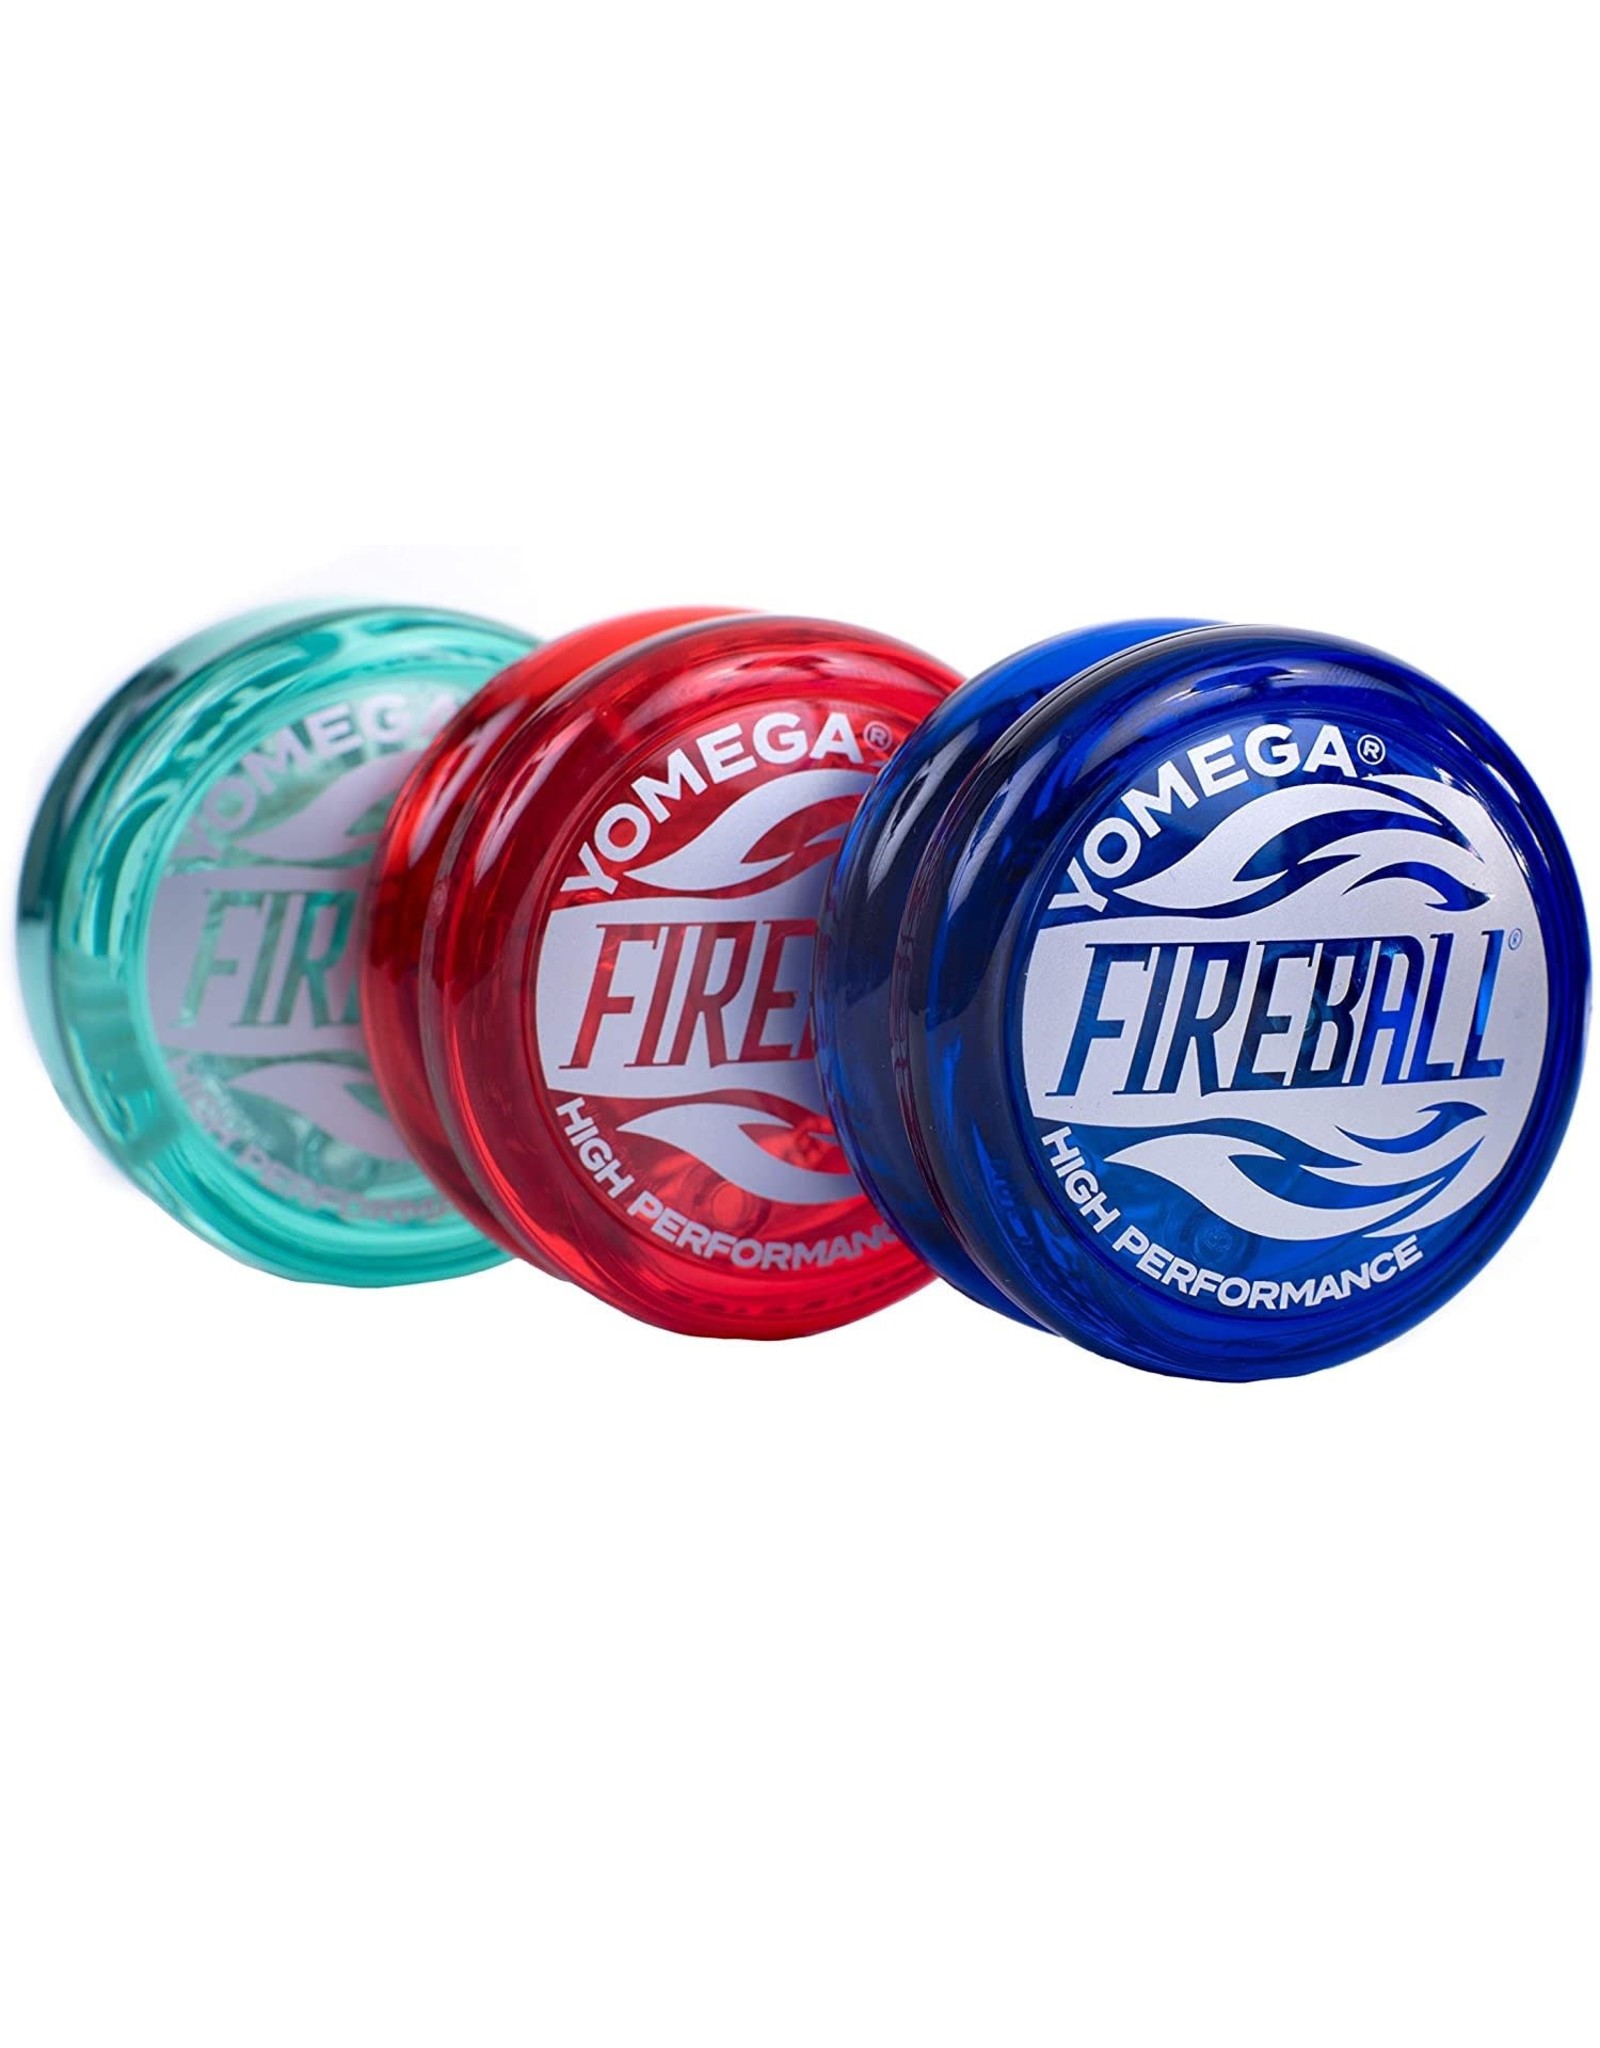 Yomega Fireball - Original Transaxle System